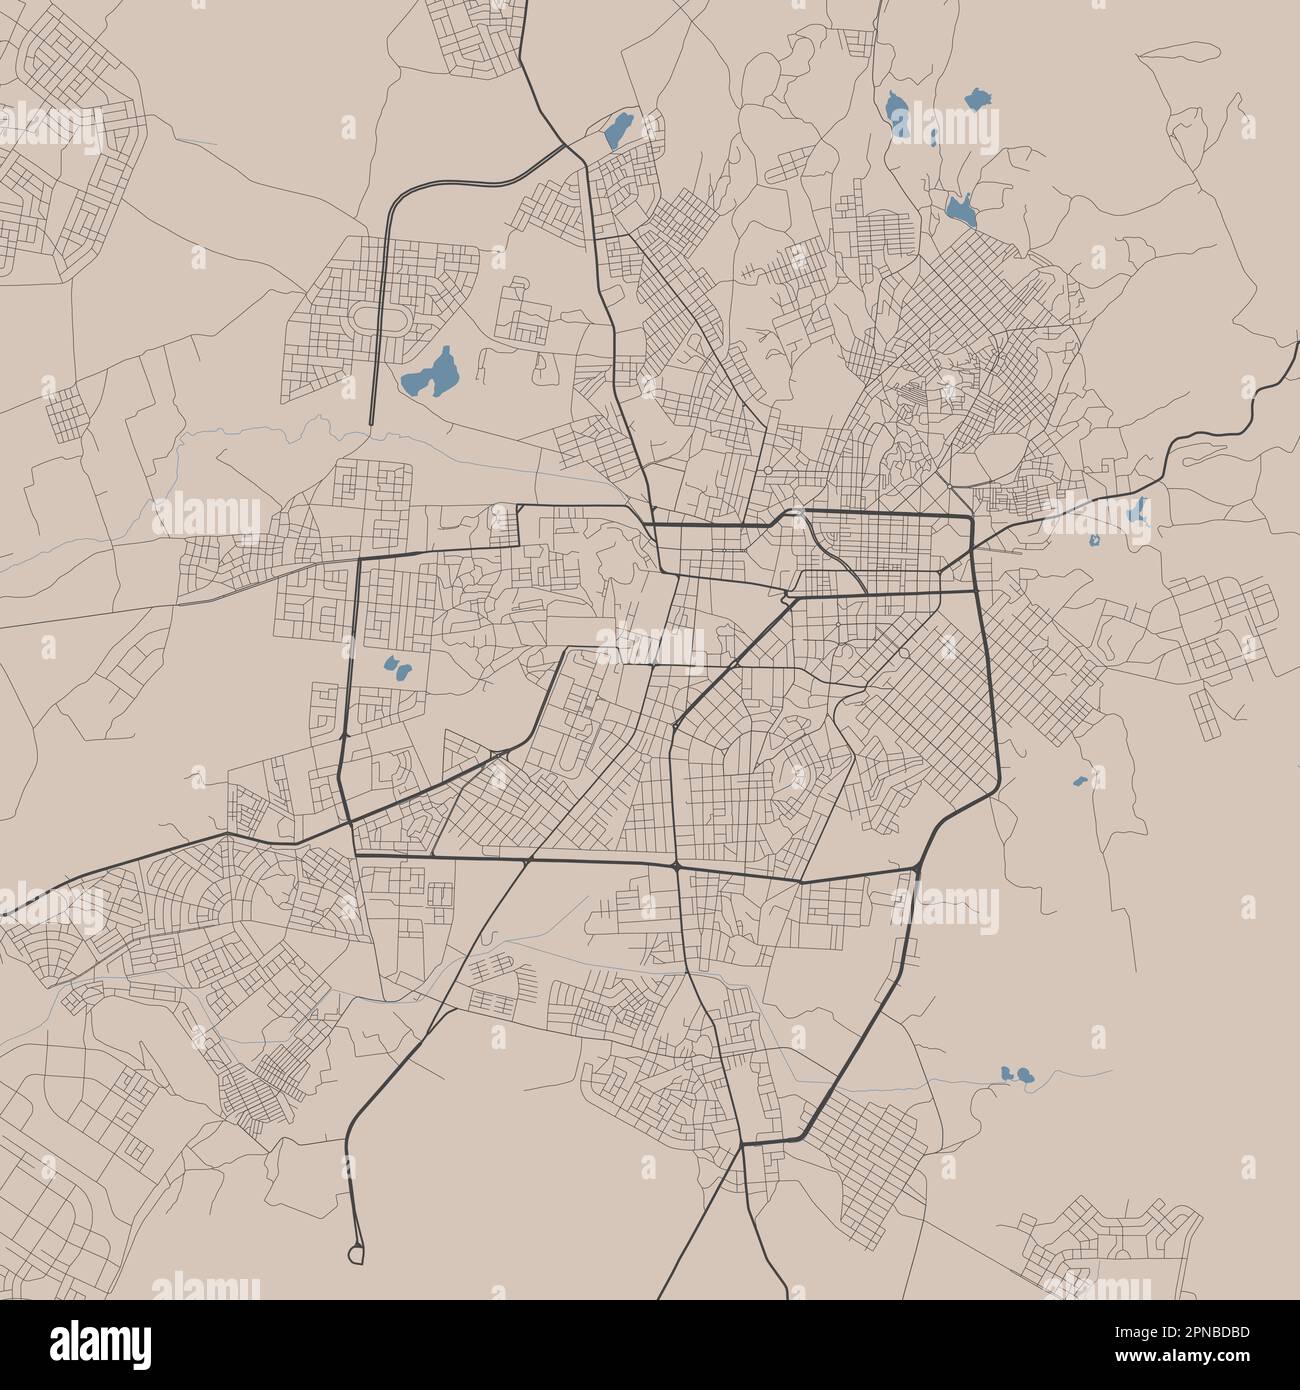 Detailed map of Asmara city, capital of Eritrea. Municipal ...